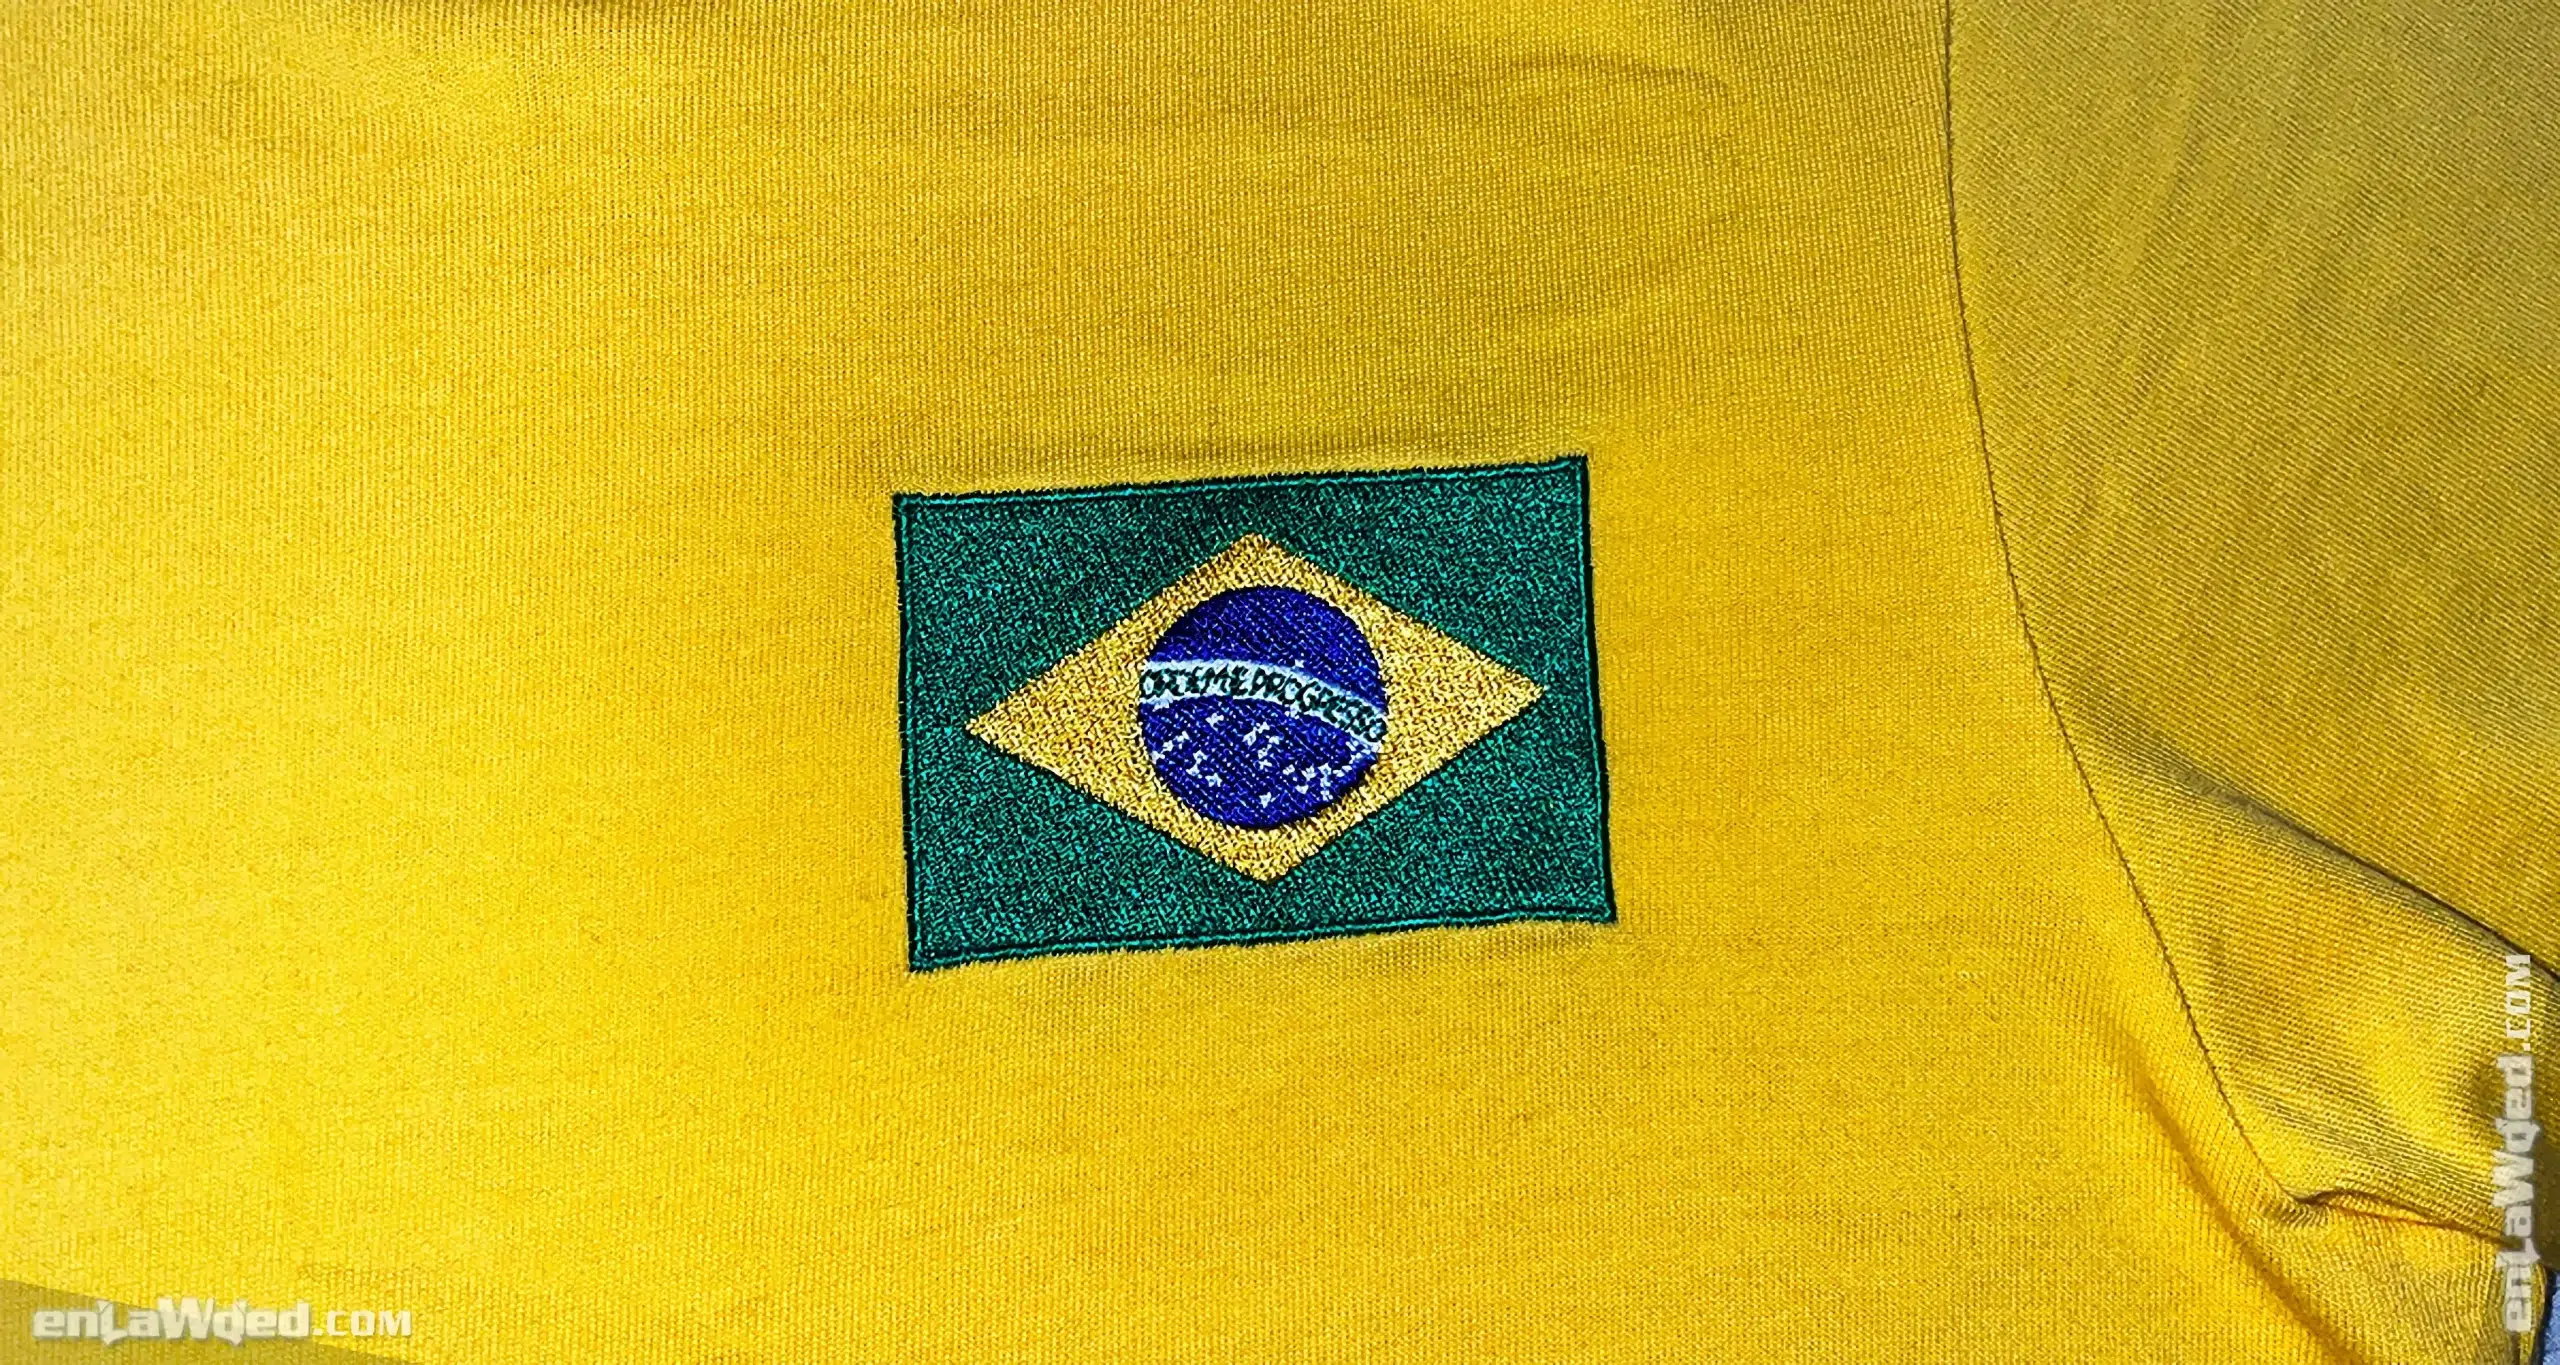 Men’s 2006 Brasil ’70 T-Shirt by Adidas Originals: Memorable (EnLawded.com file #lmchk90215ip2y123510kg9st)